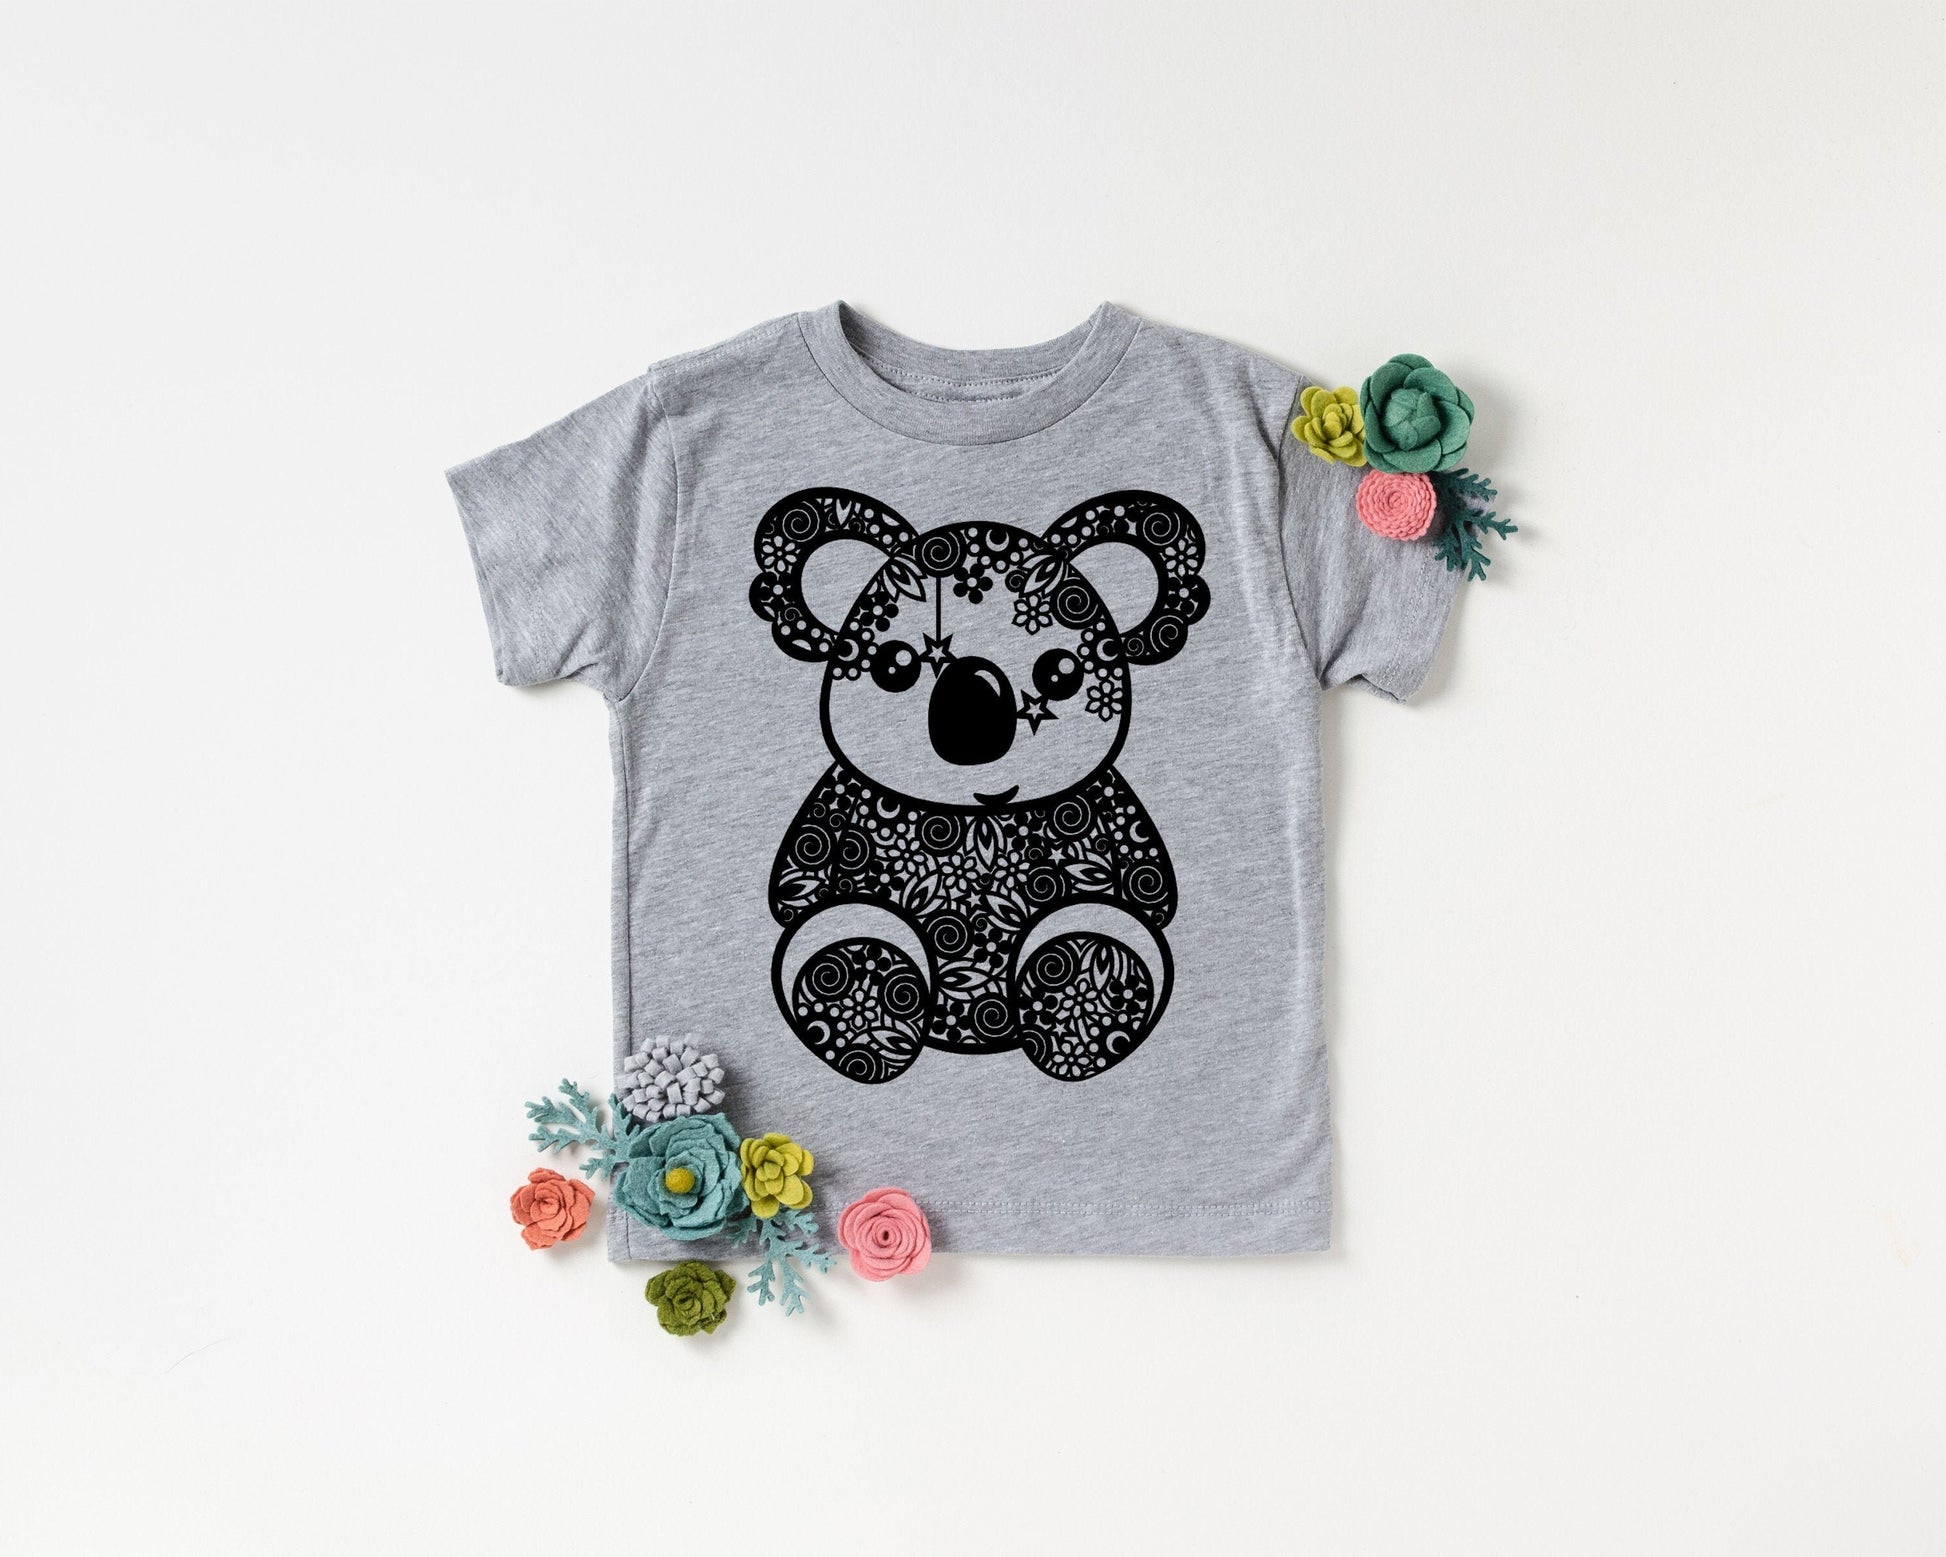 Koala Patterned Toddler or Youth Shirt - Cute Toddler Shirt - Toddler Girl Shirt - Animal Shirt - Koala Bear - Baby Shirt - Koala Lover Tee